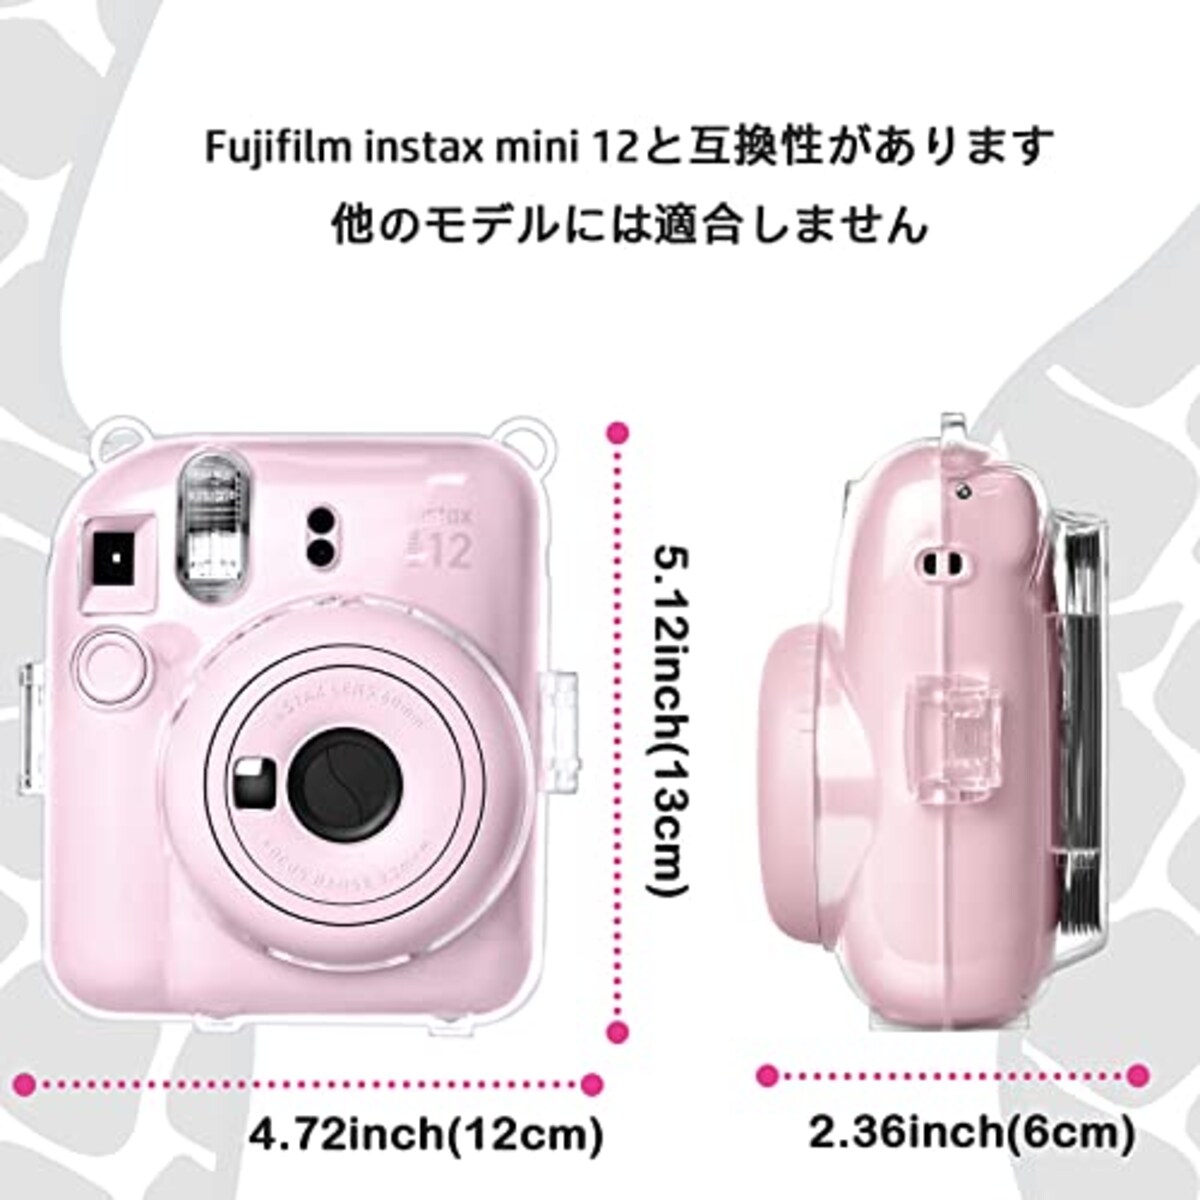  HIYQIN mini12 ケース 富士フイルム Instax Mini 12 カメラ用保護クリアケース クリスタルハードシェルカバー ショルダーストラップ付き カメラステッカー画像2 